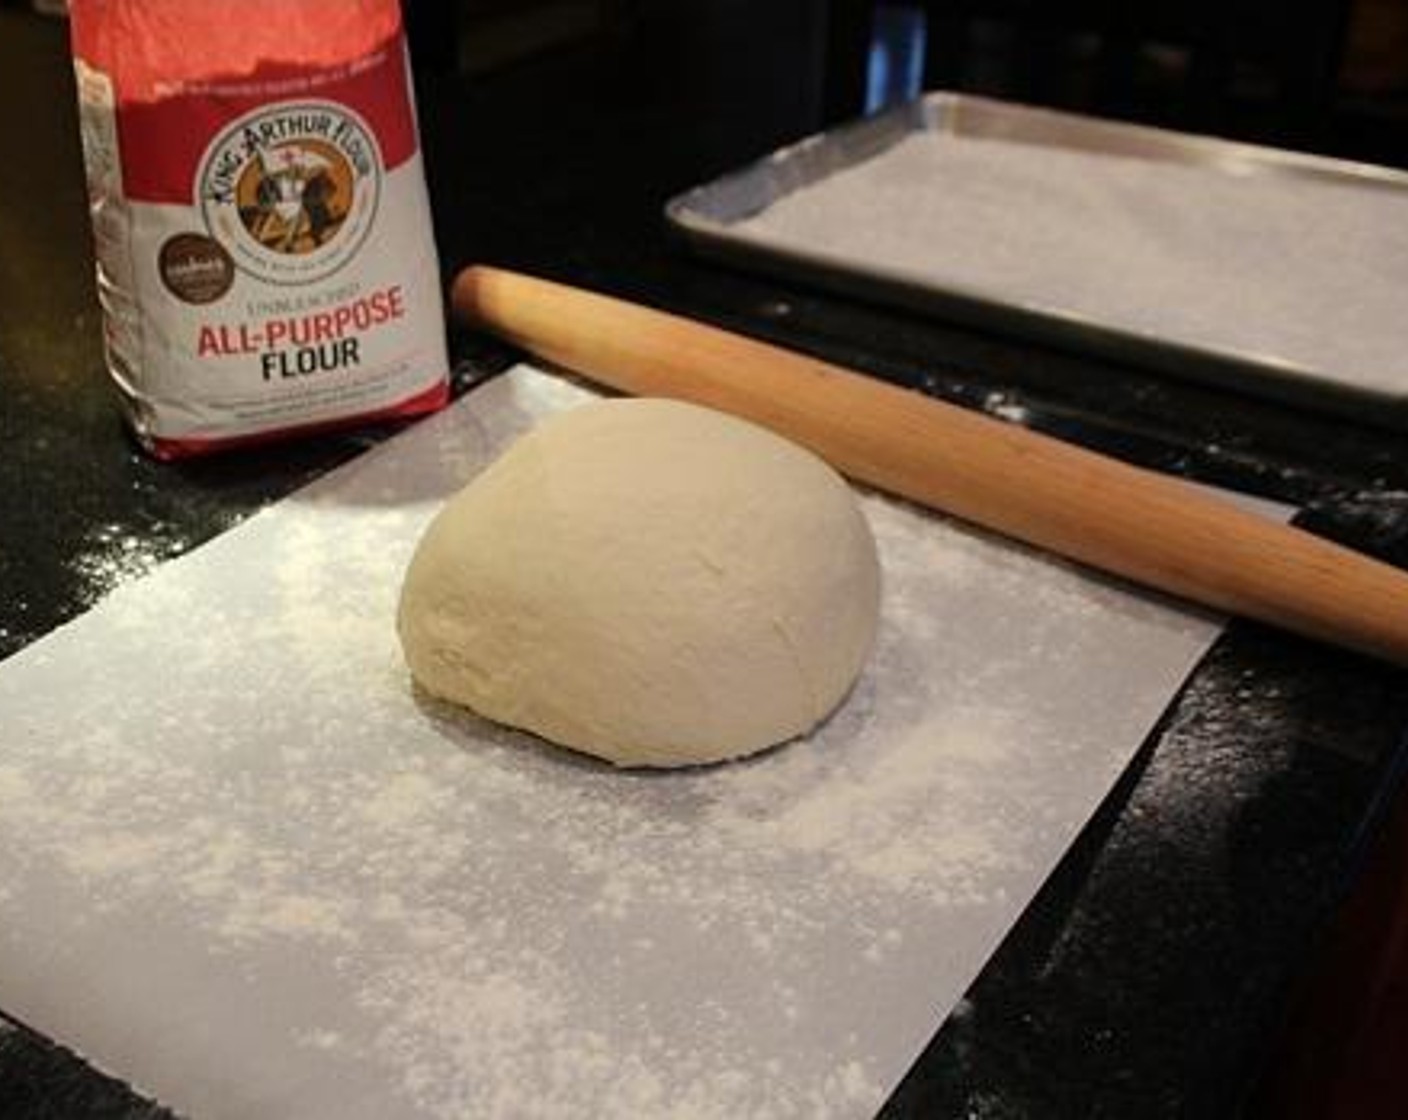 step 2 Then add the Salt (1 tsp), Bread Flour (4 1/2 cups), Granulated Sugar (3 Tbsp), and Active Dry Yeast (1 Tbsp).